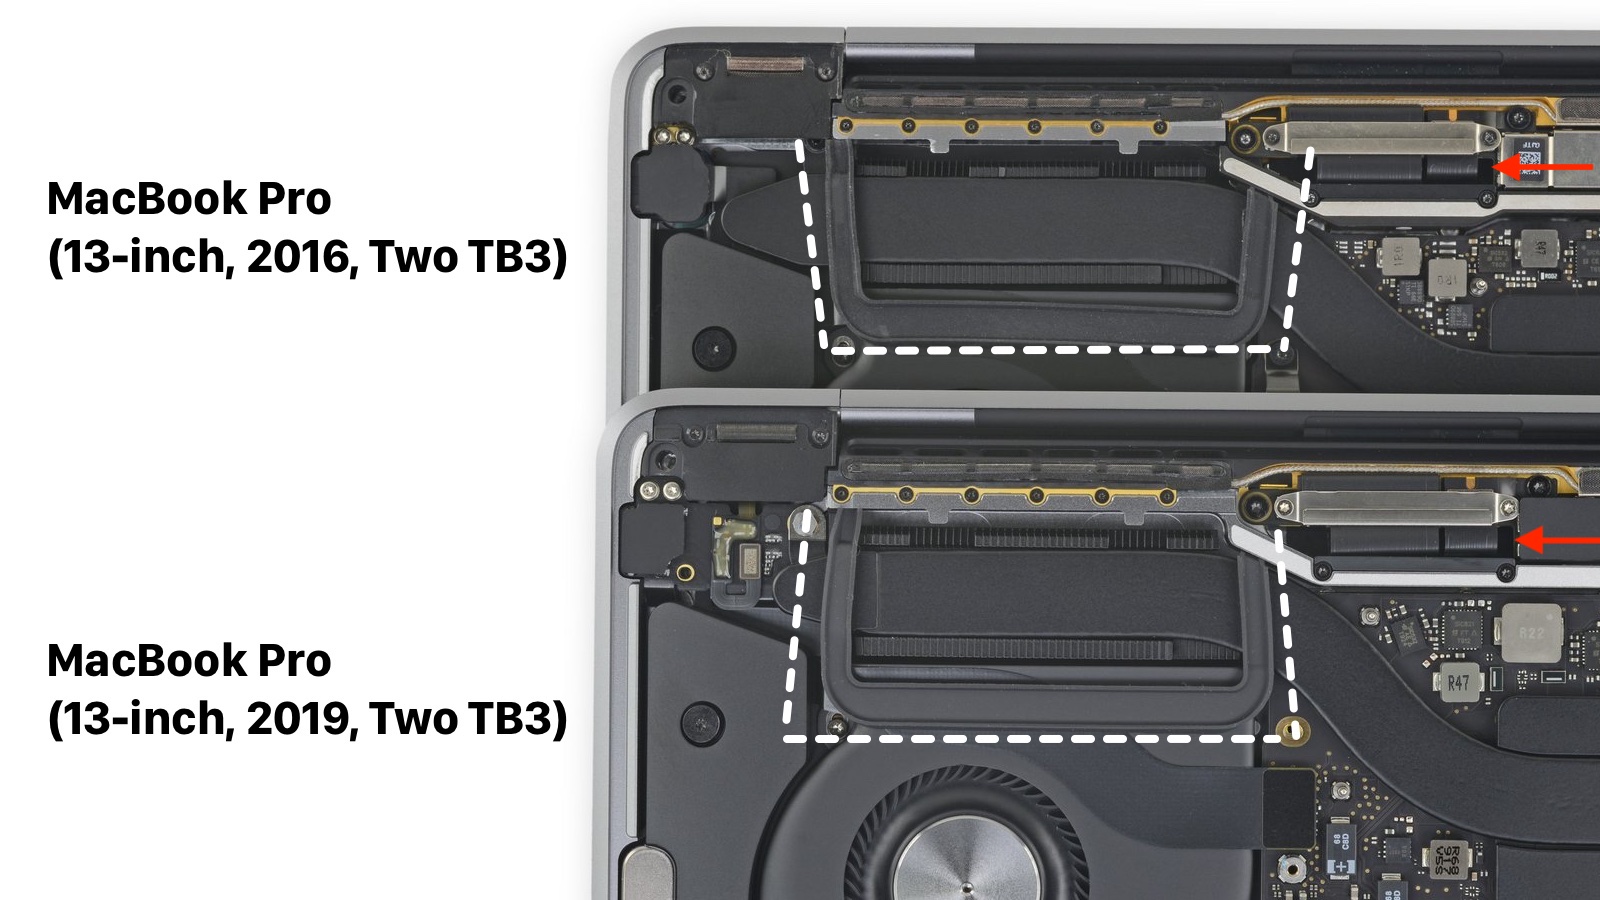 MacBook Pro (13-inch, 2019, Two TB3)のFlexgate対策